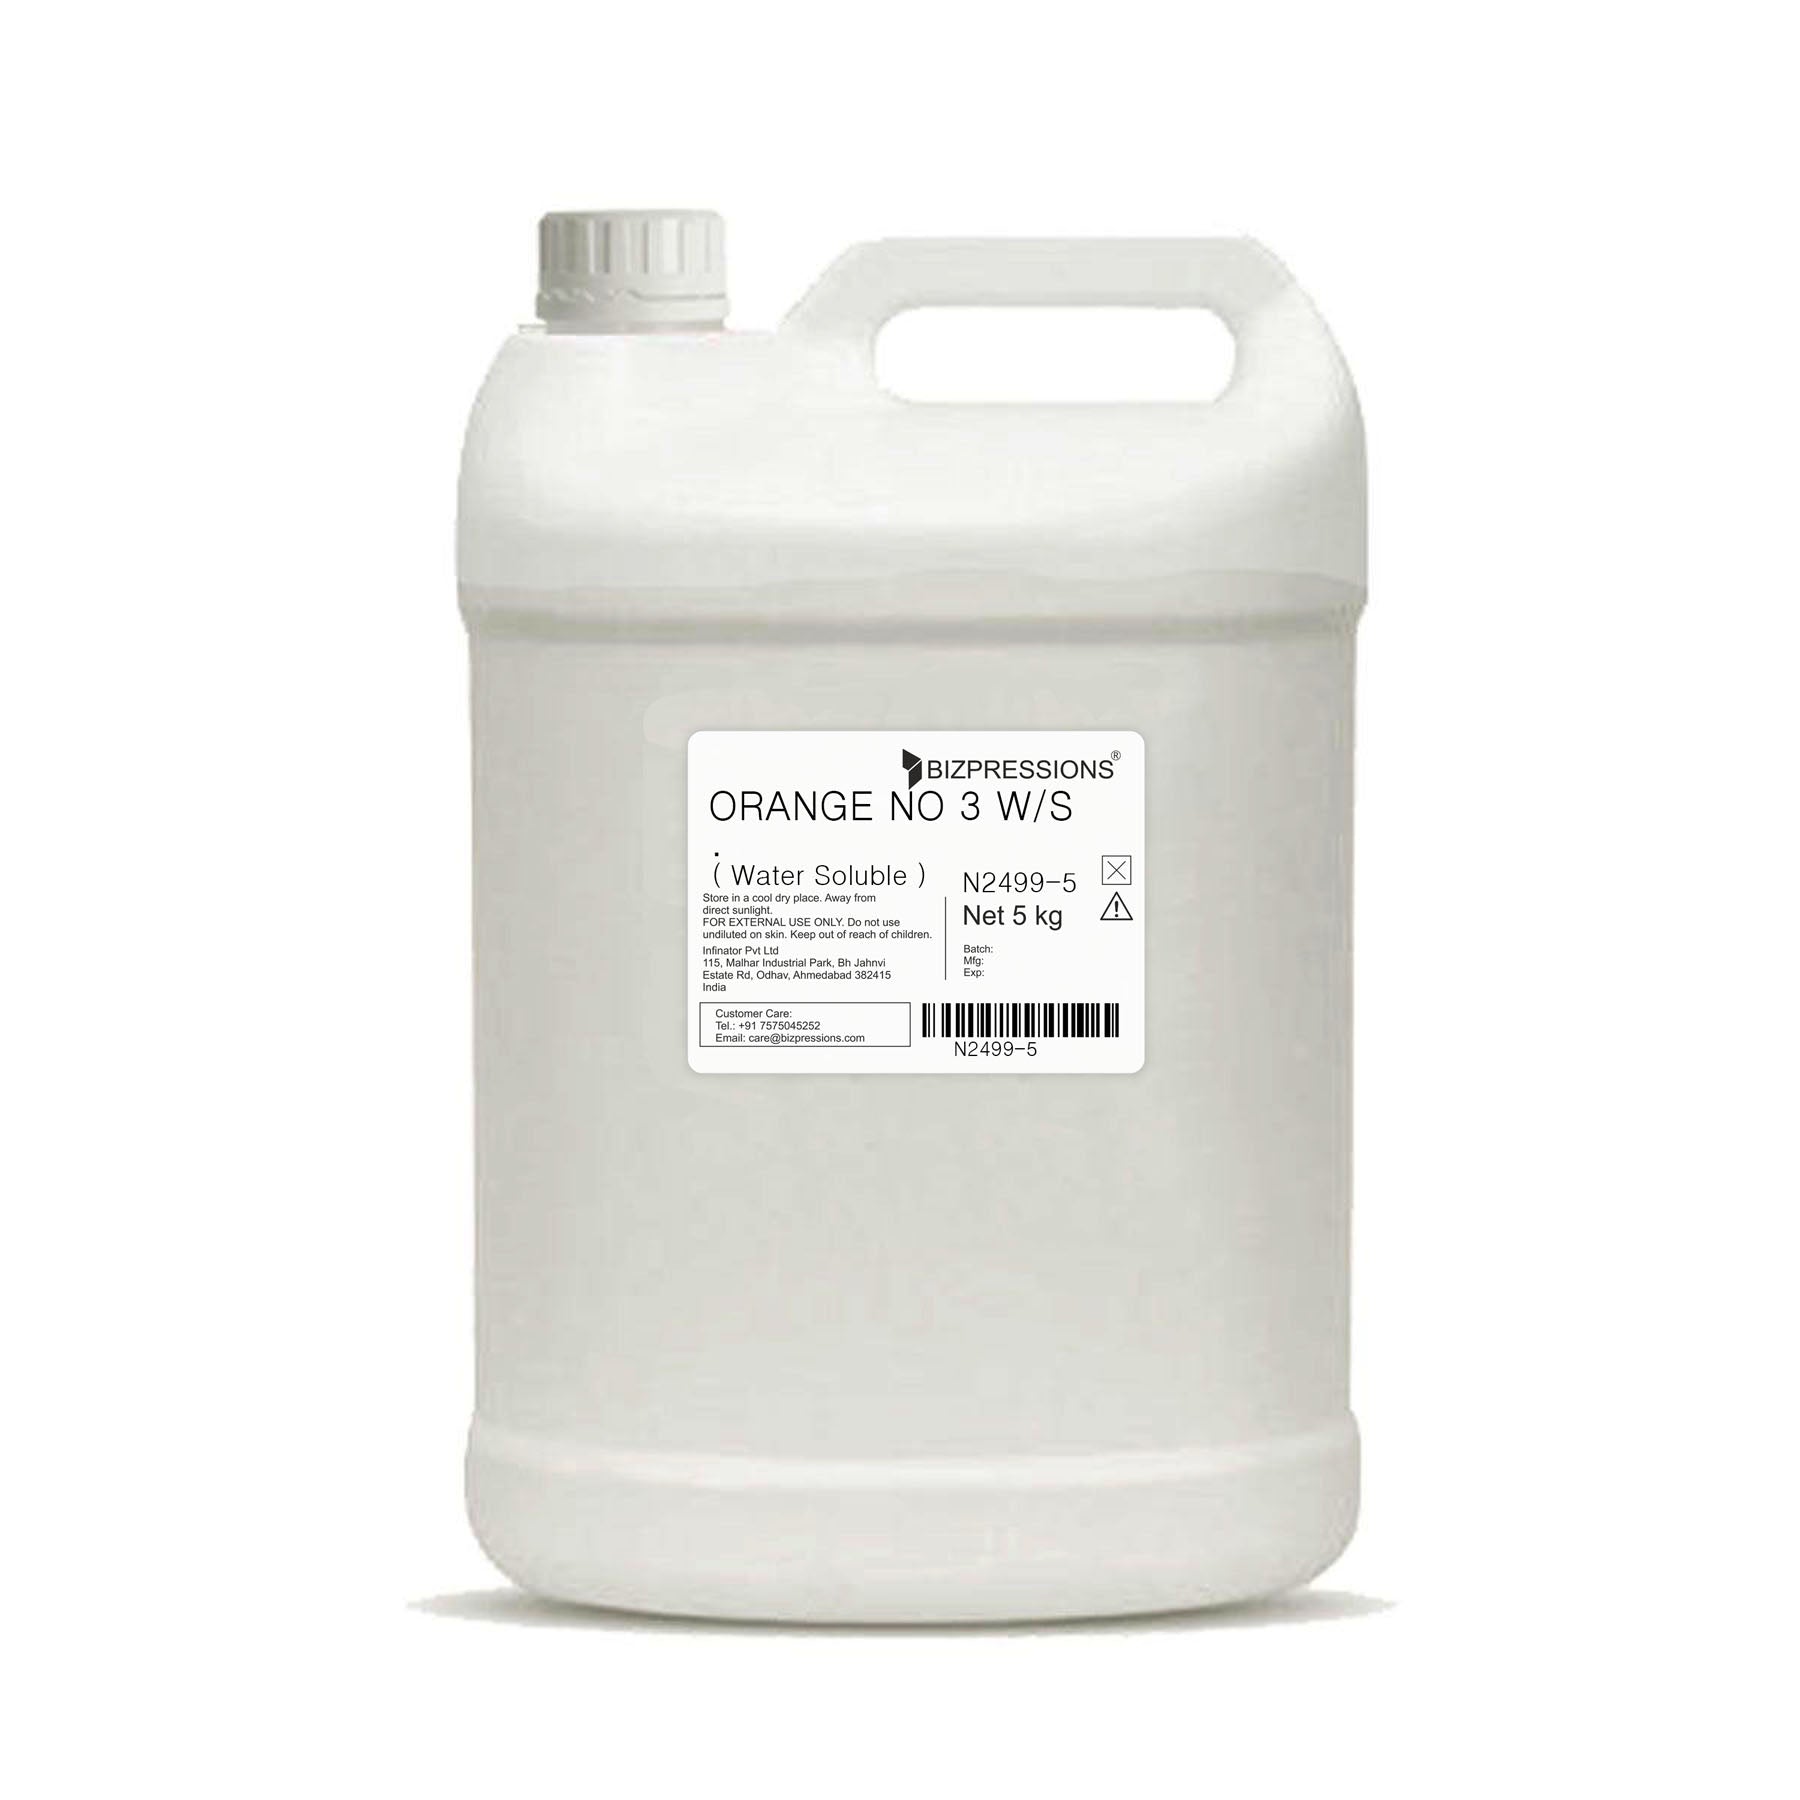 ORANGE NO 3 W/S - Fragrance ( Water Soluble ) - 5 kg